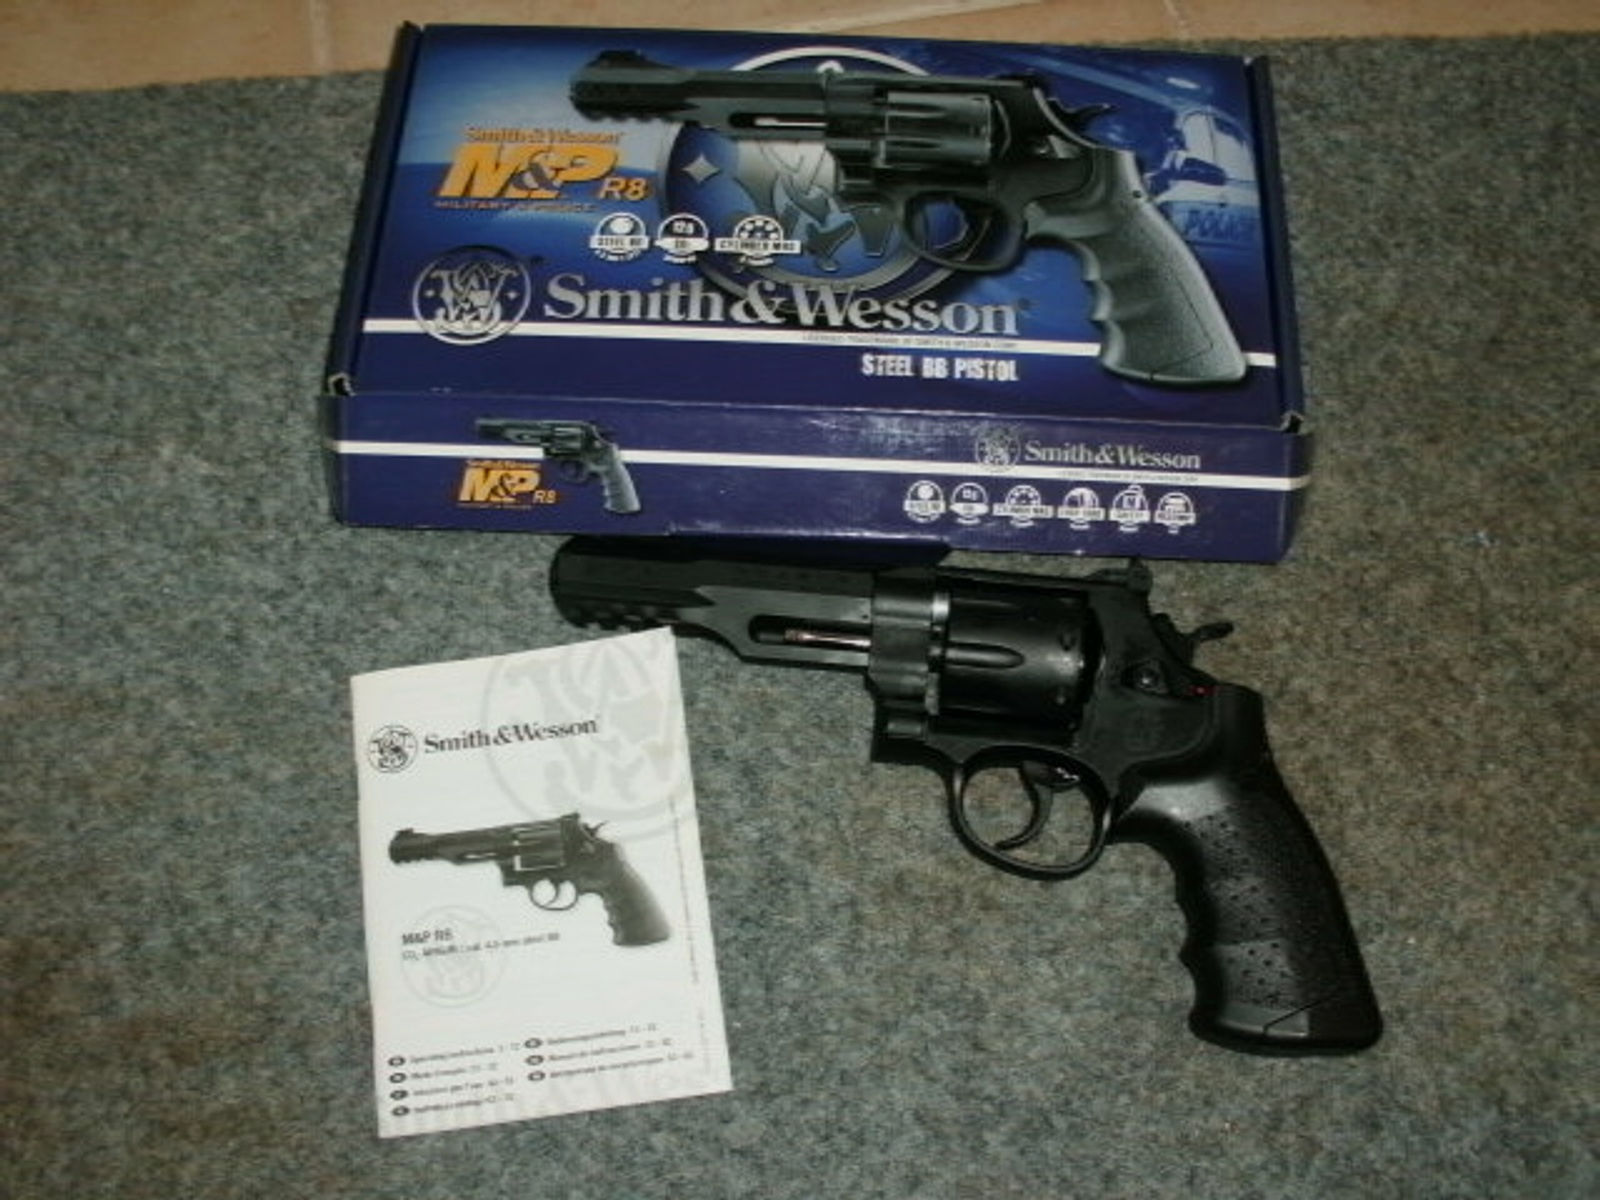 wie neu !! CO2 Revolver Modell R8 Smith & Wesson komplett mit OVP !!